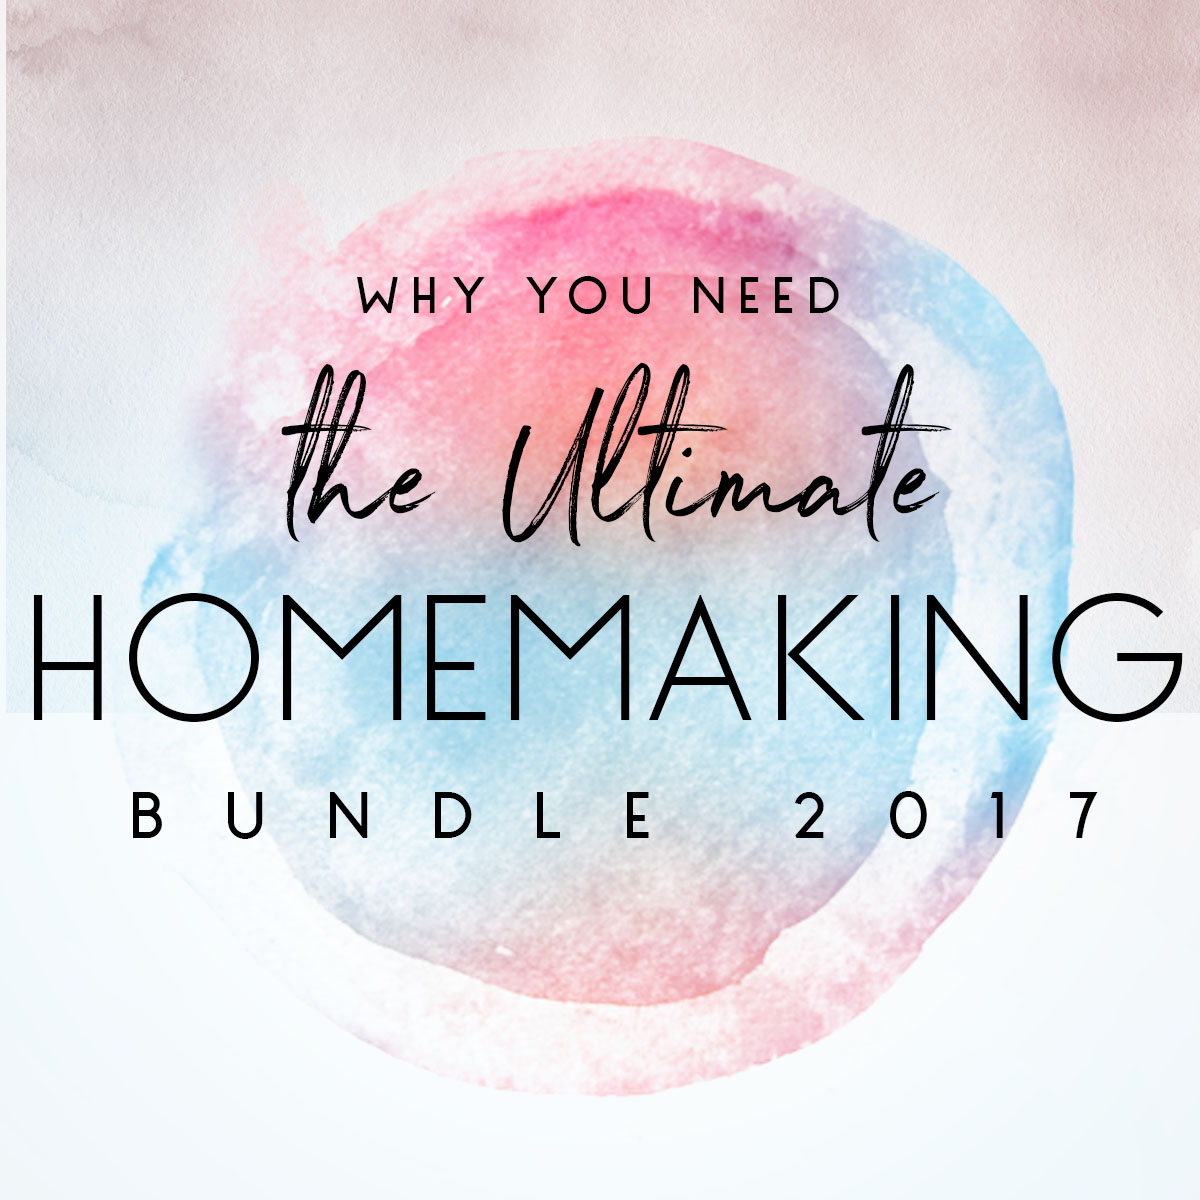 The Ultimate Homemaking Bundle